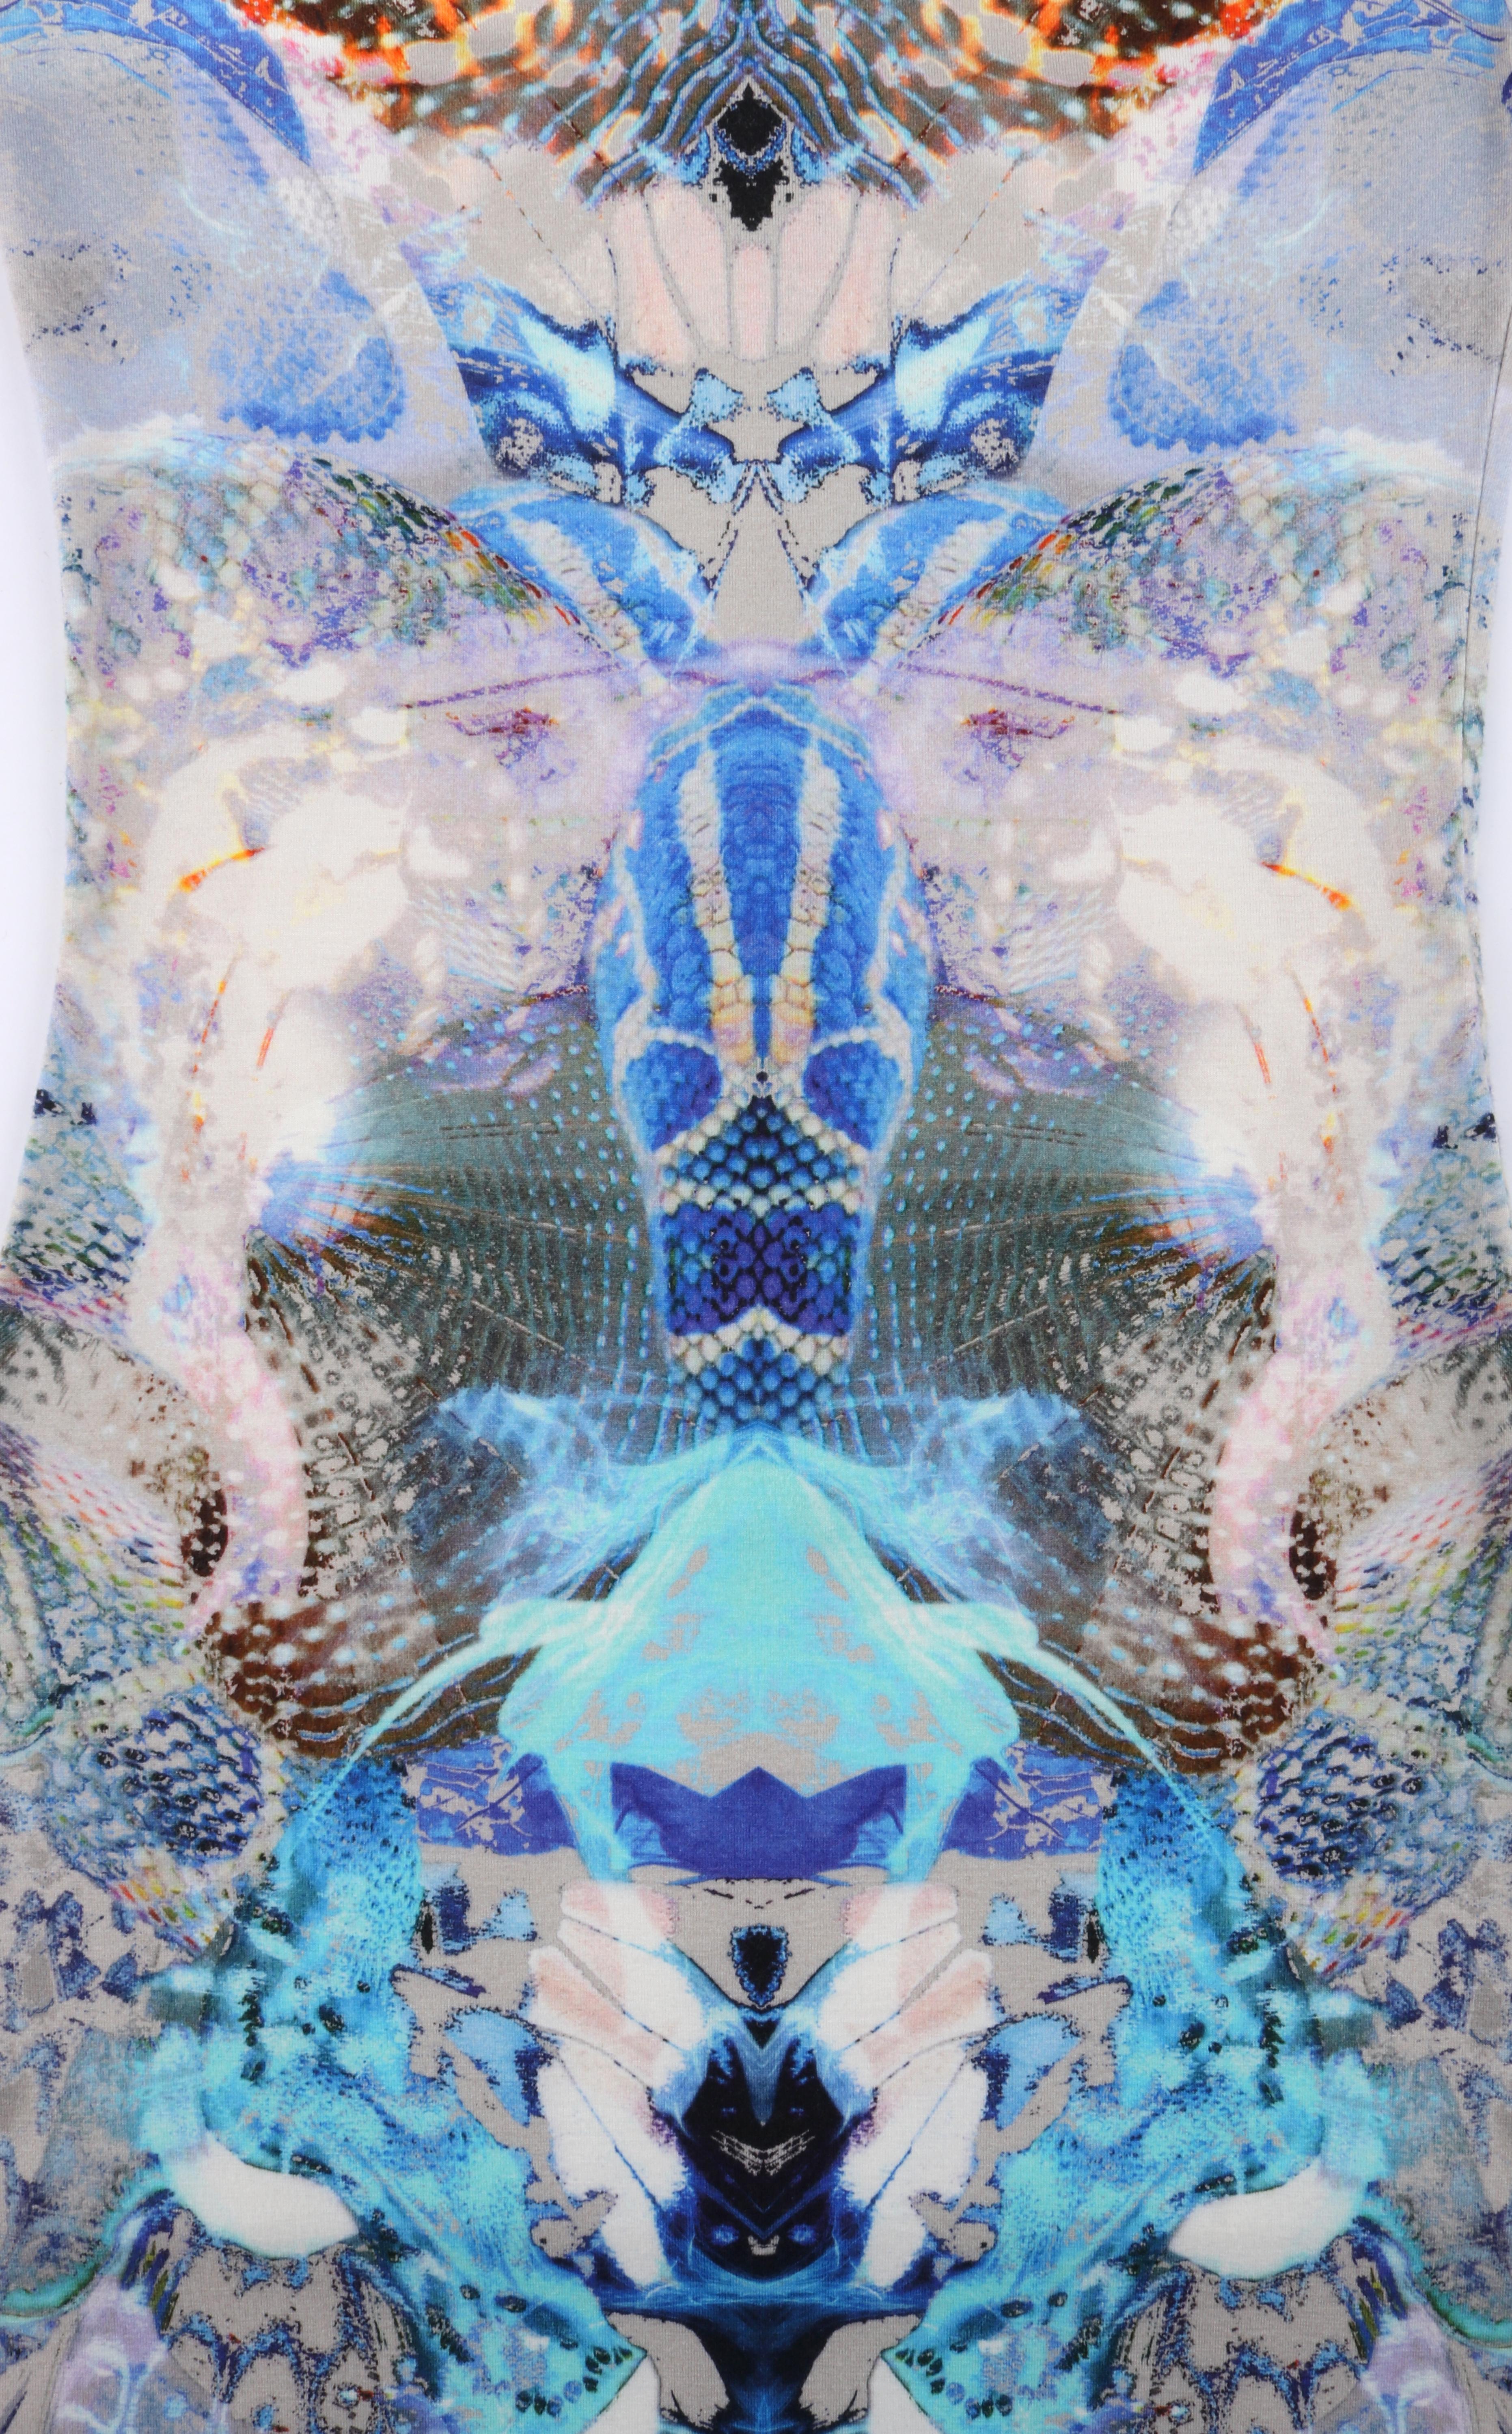 Women's ALEXANDER McQUEEN S/S 2010 “Plato’s Atlantis” Gray Jellyfish Print Sheath Dress For Sale